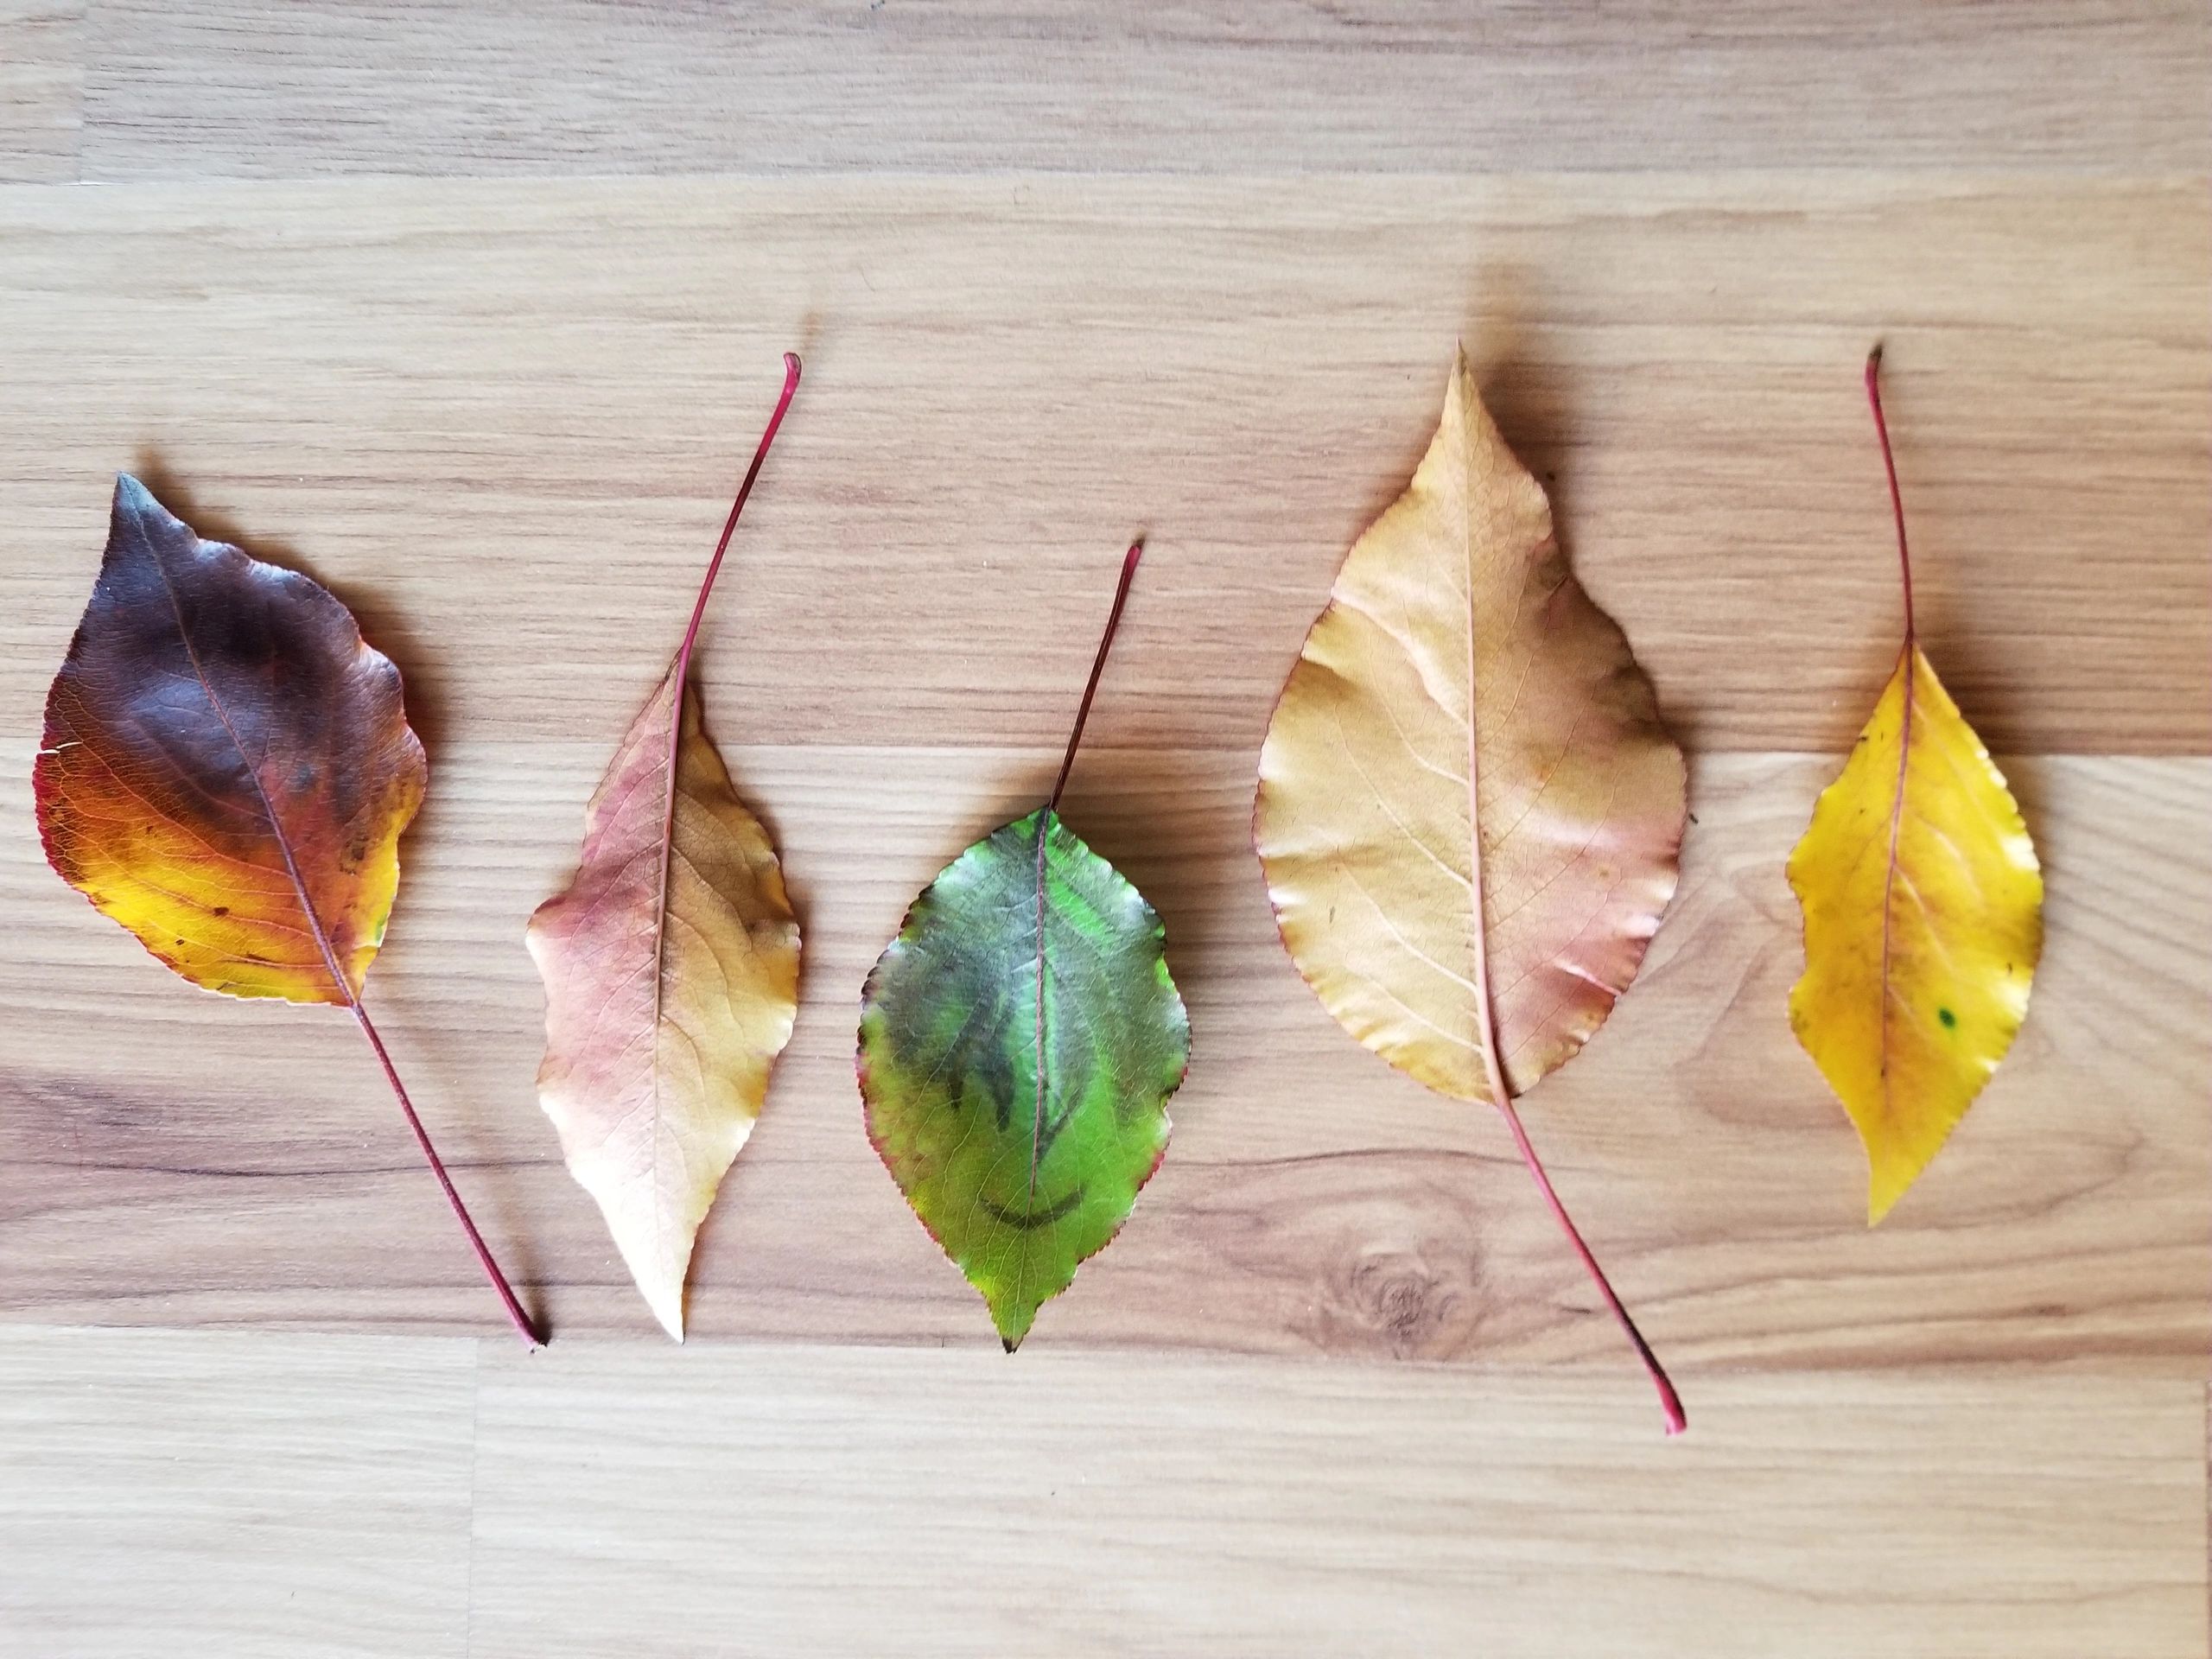 Leaves, image by Dori Gilbert